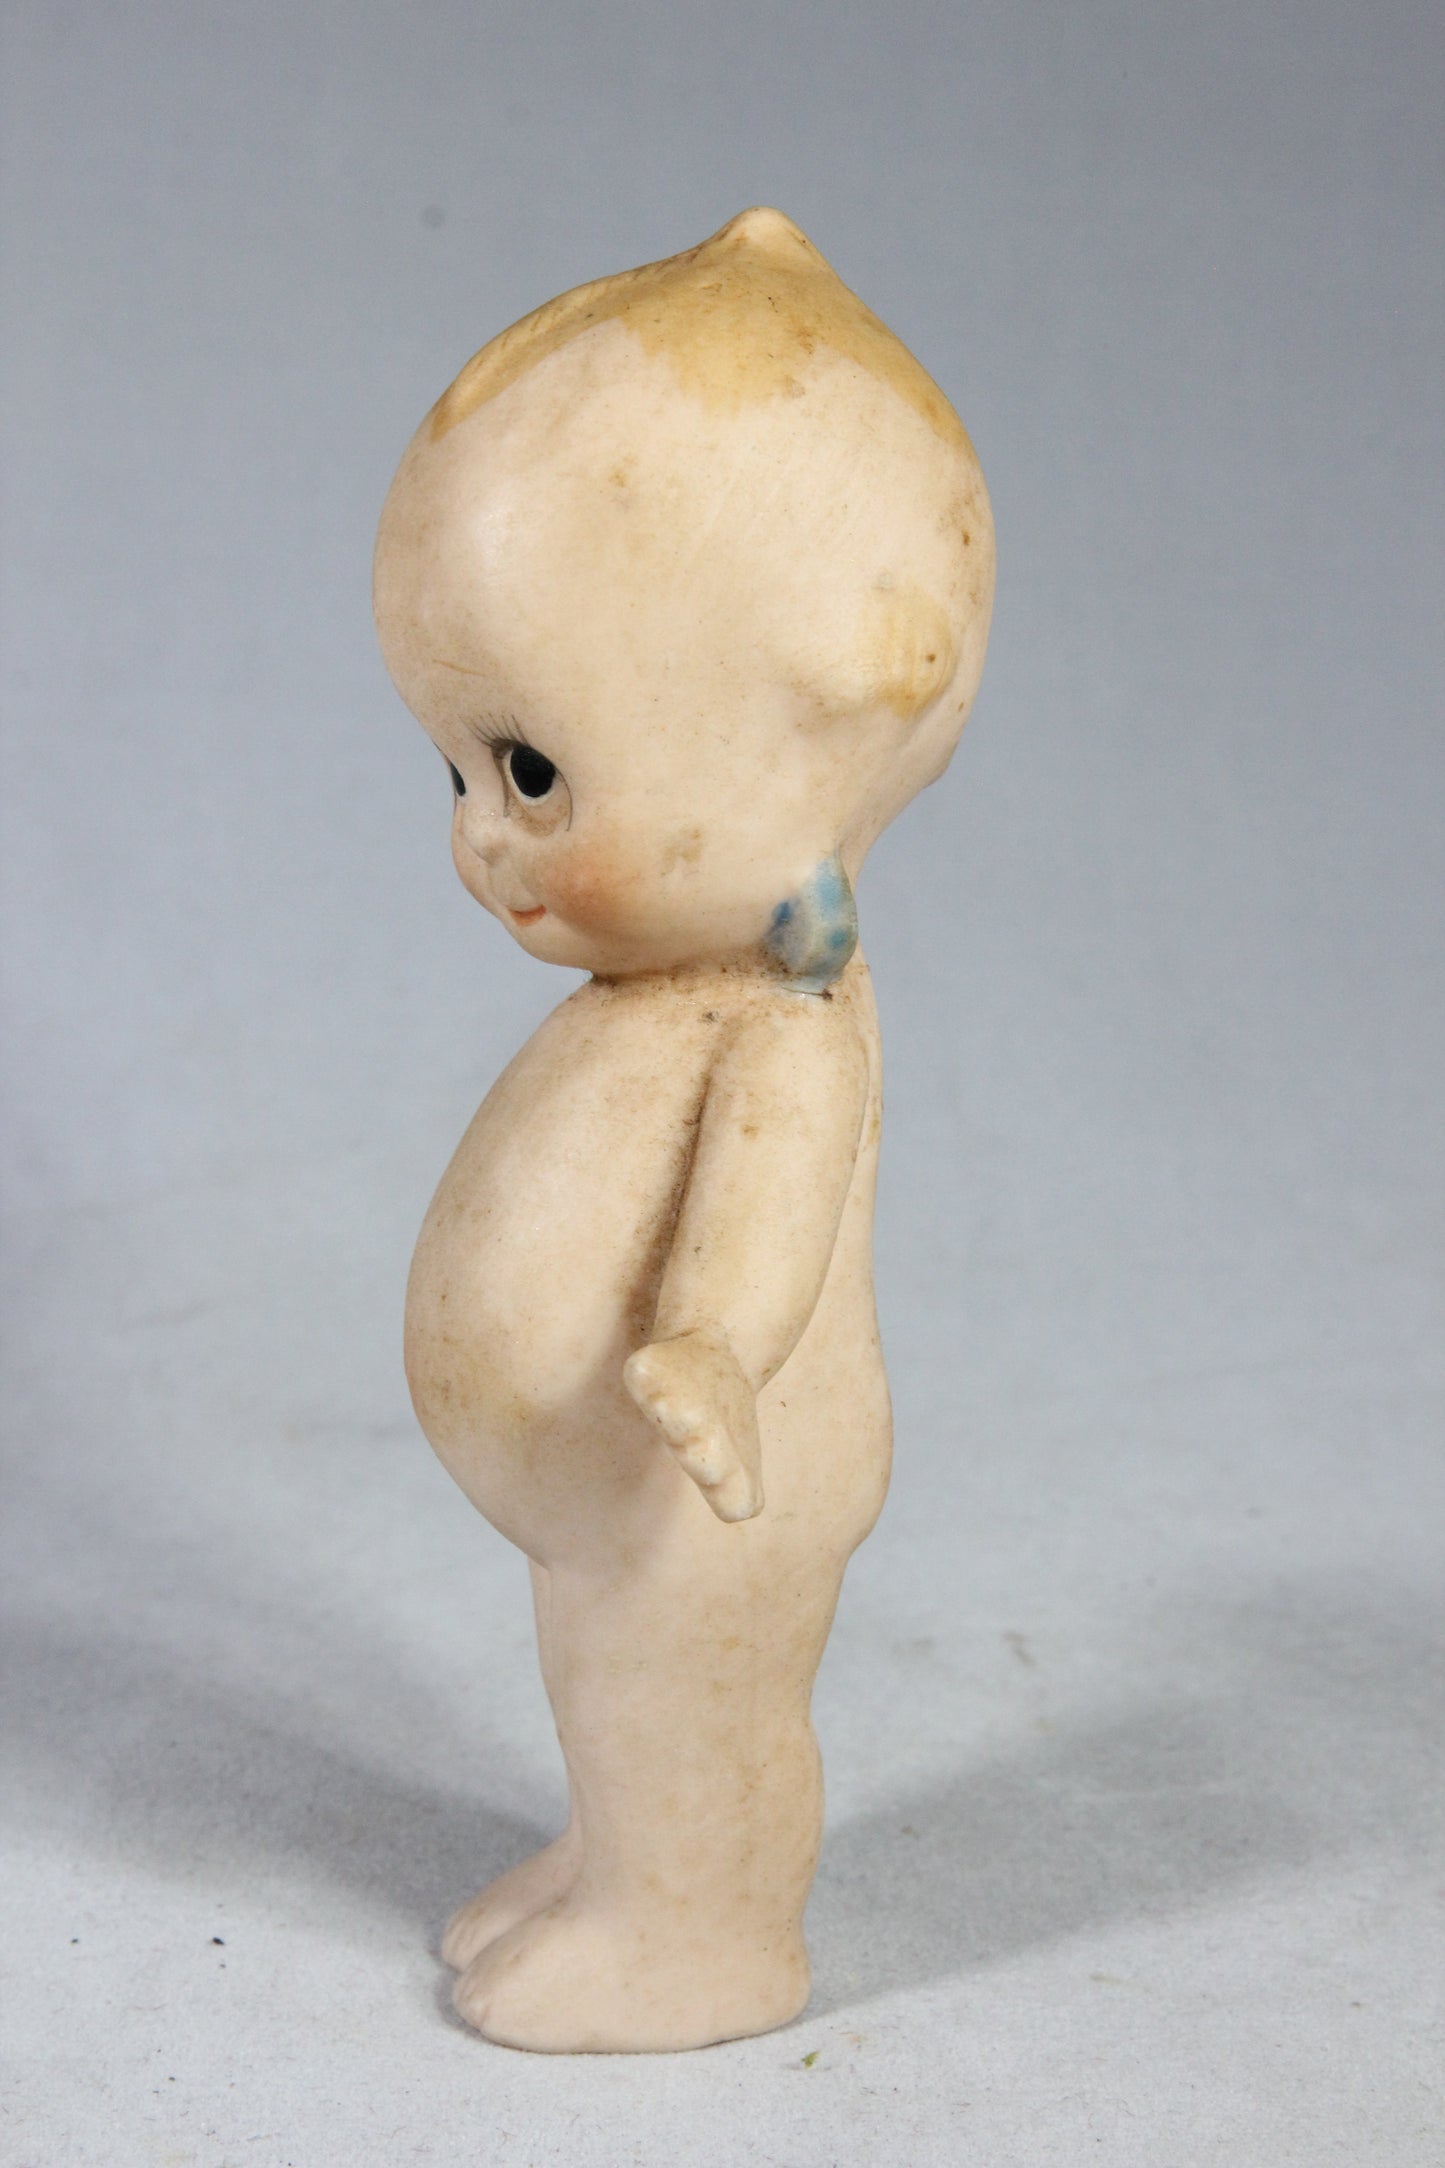 Standing Bisque Kewpie Doll, 4.5"